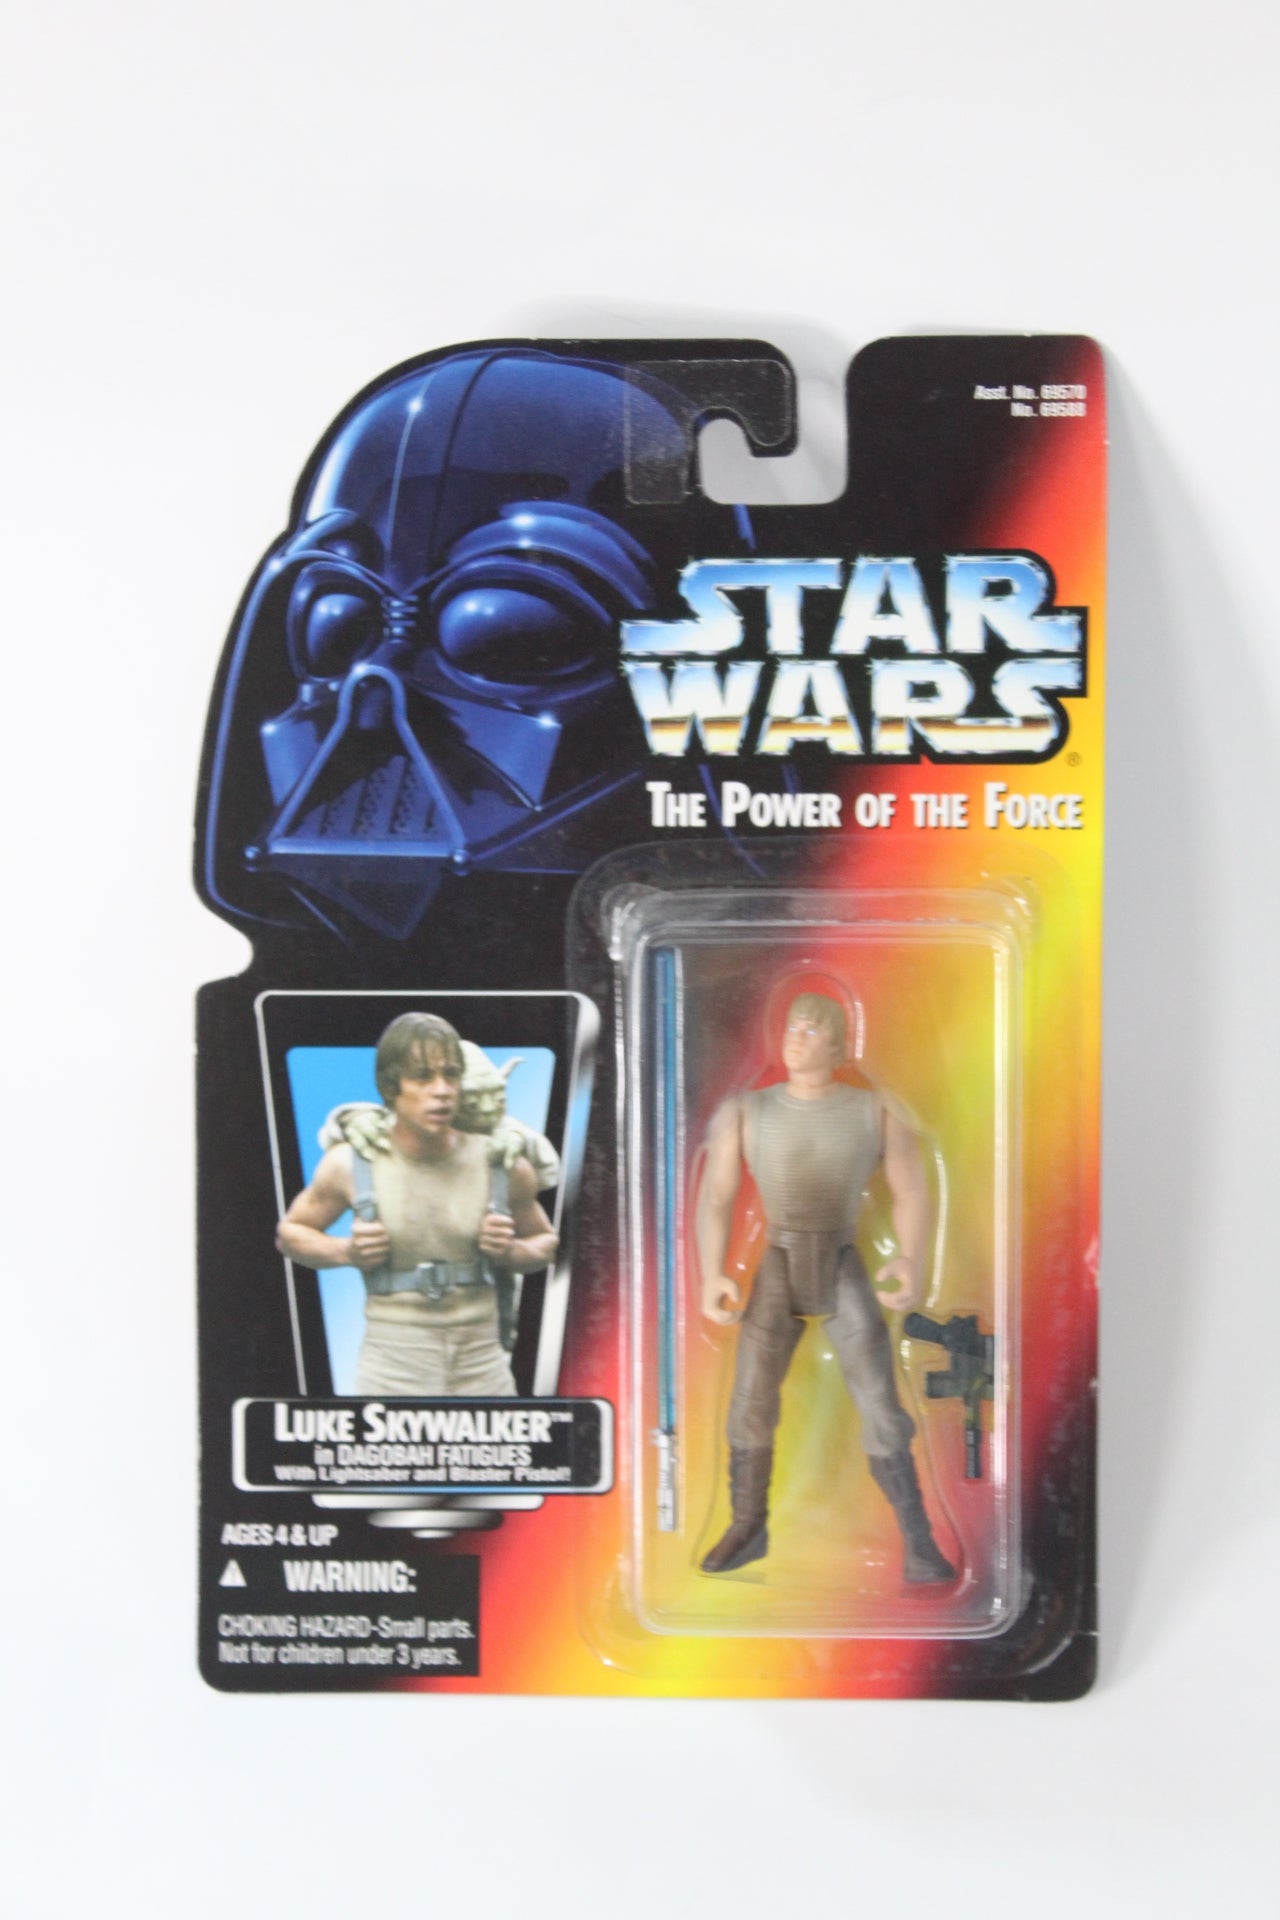 Luke Skywalker POTF Star Wars Kenner